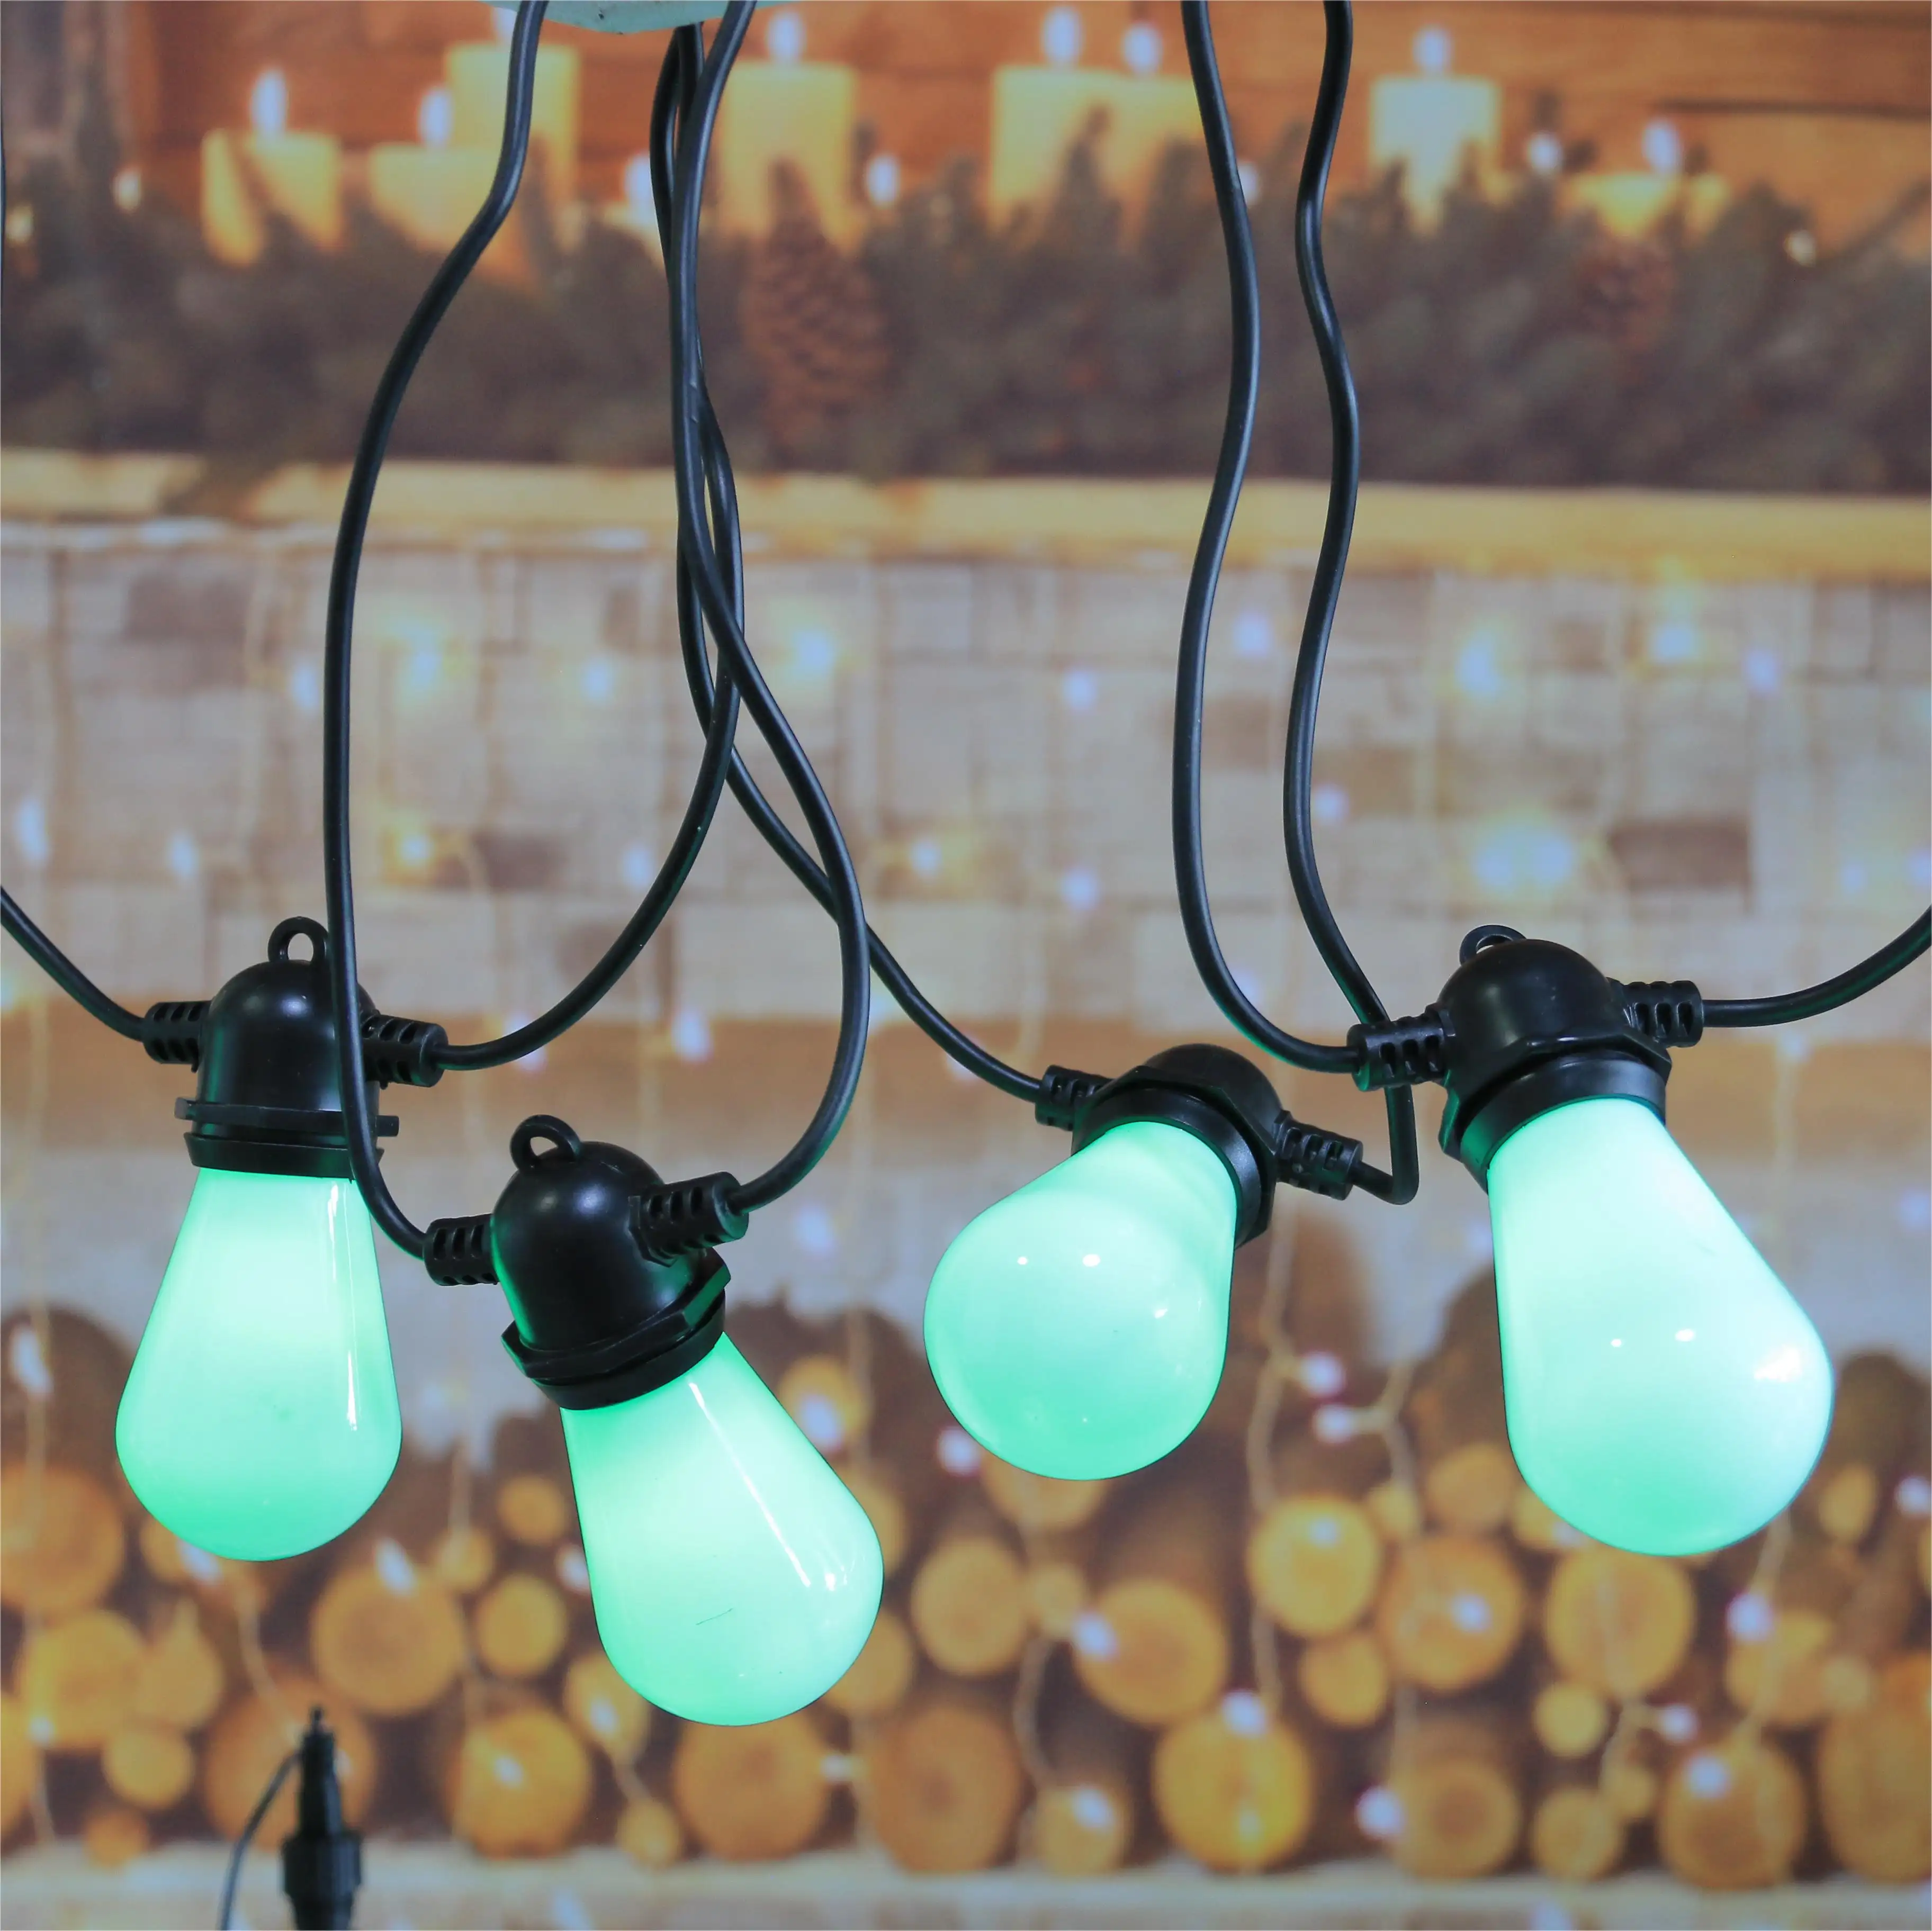 Decorative outdoor light bulbs